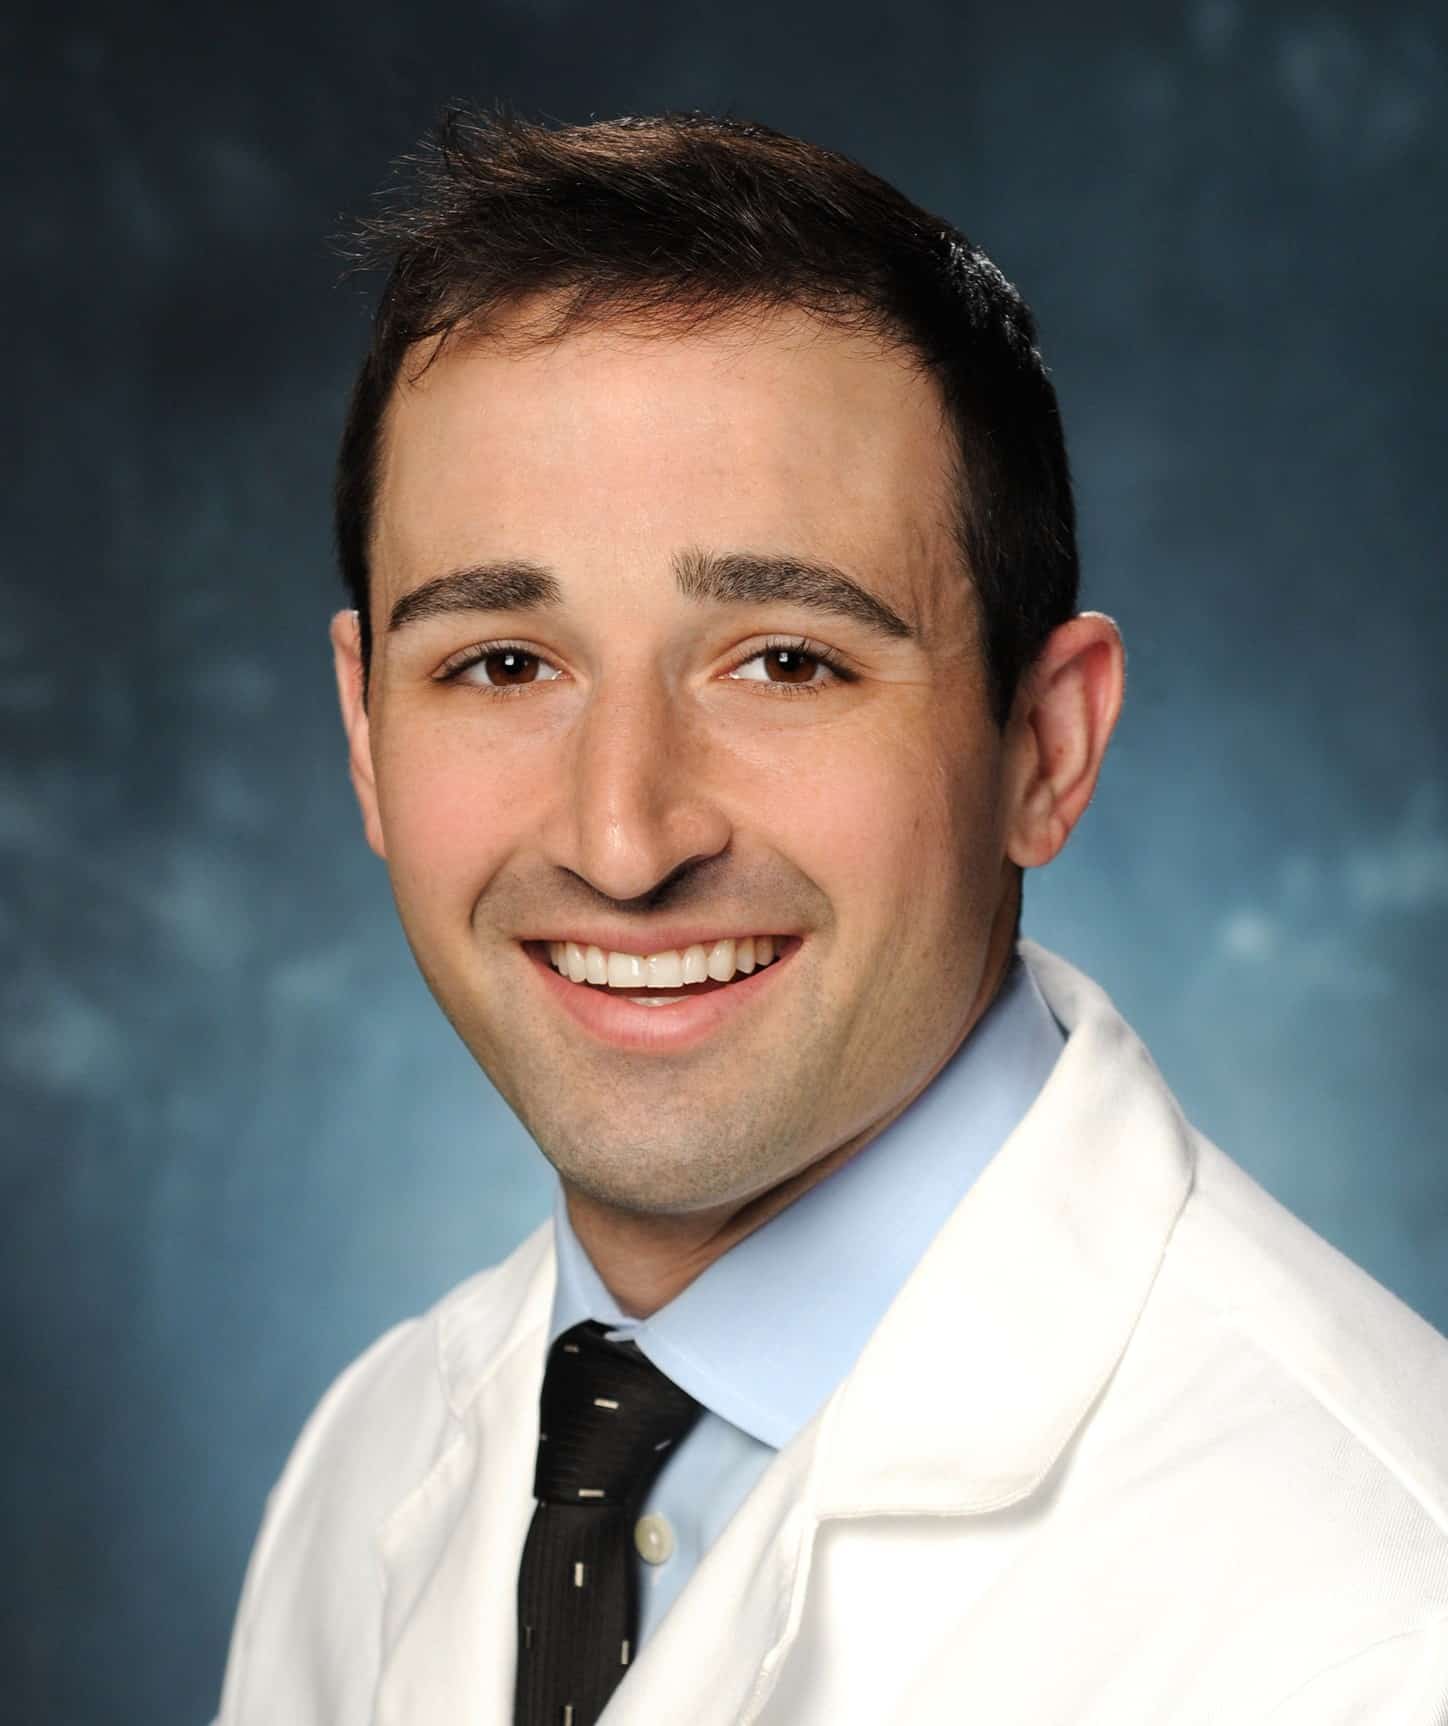 Dr. Andrew Pridjian joins Urology Specialists of Atlanta